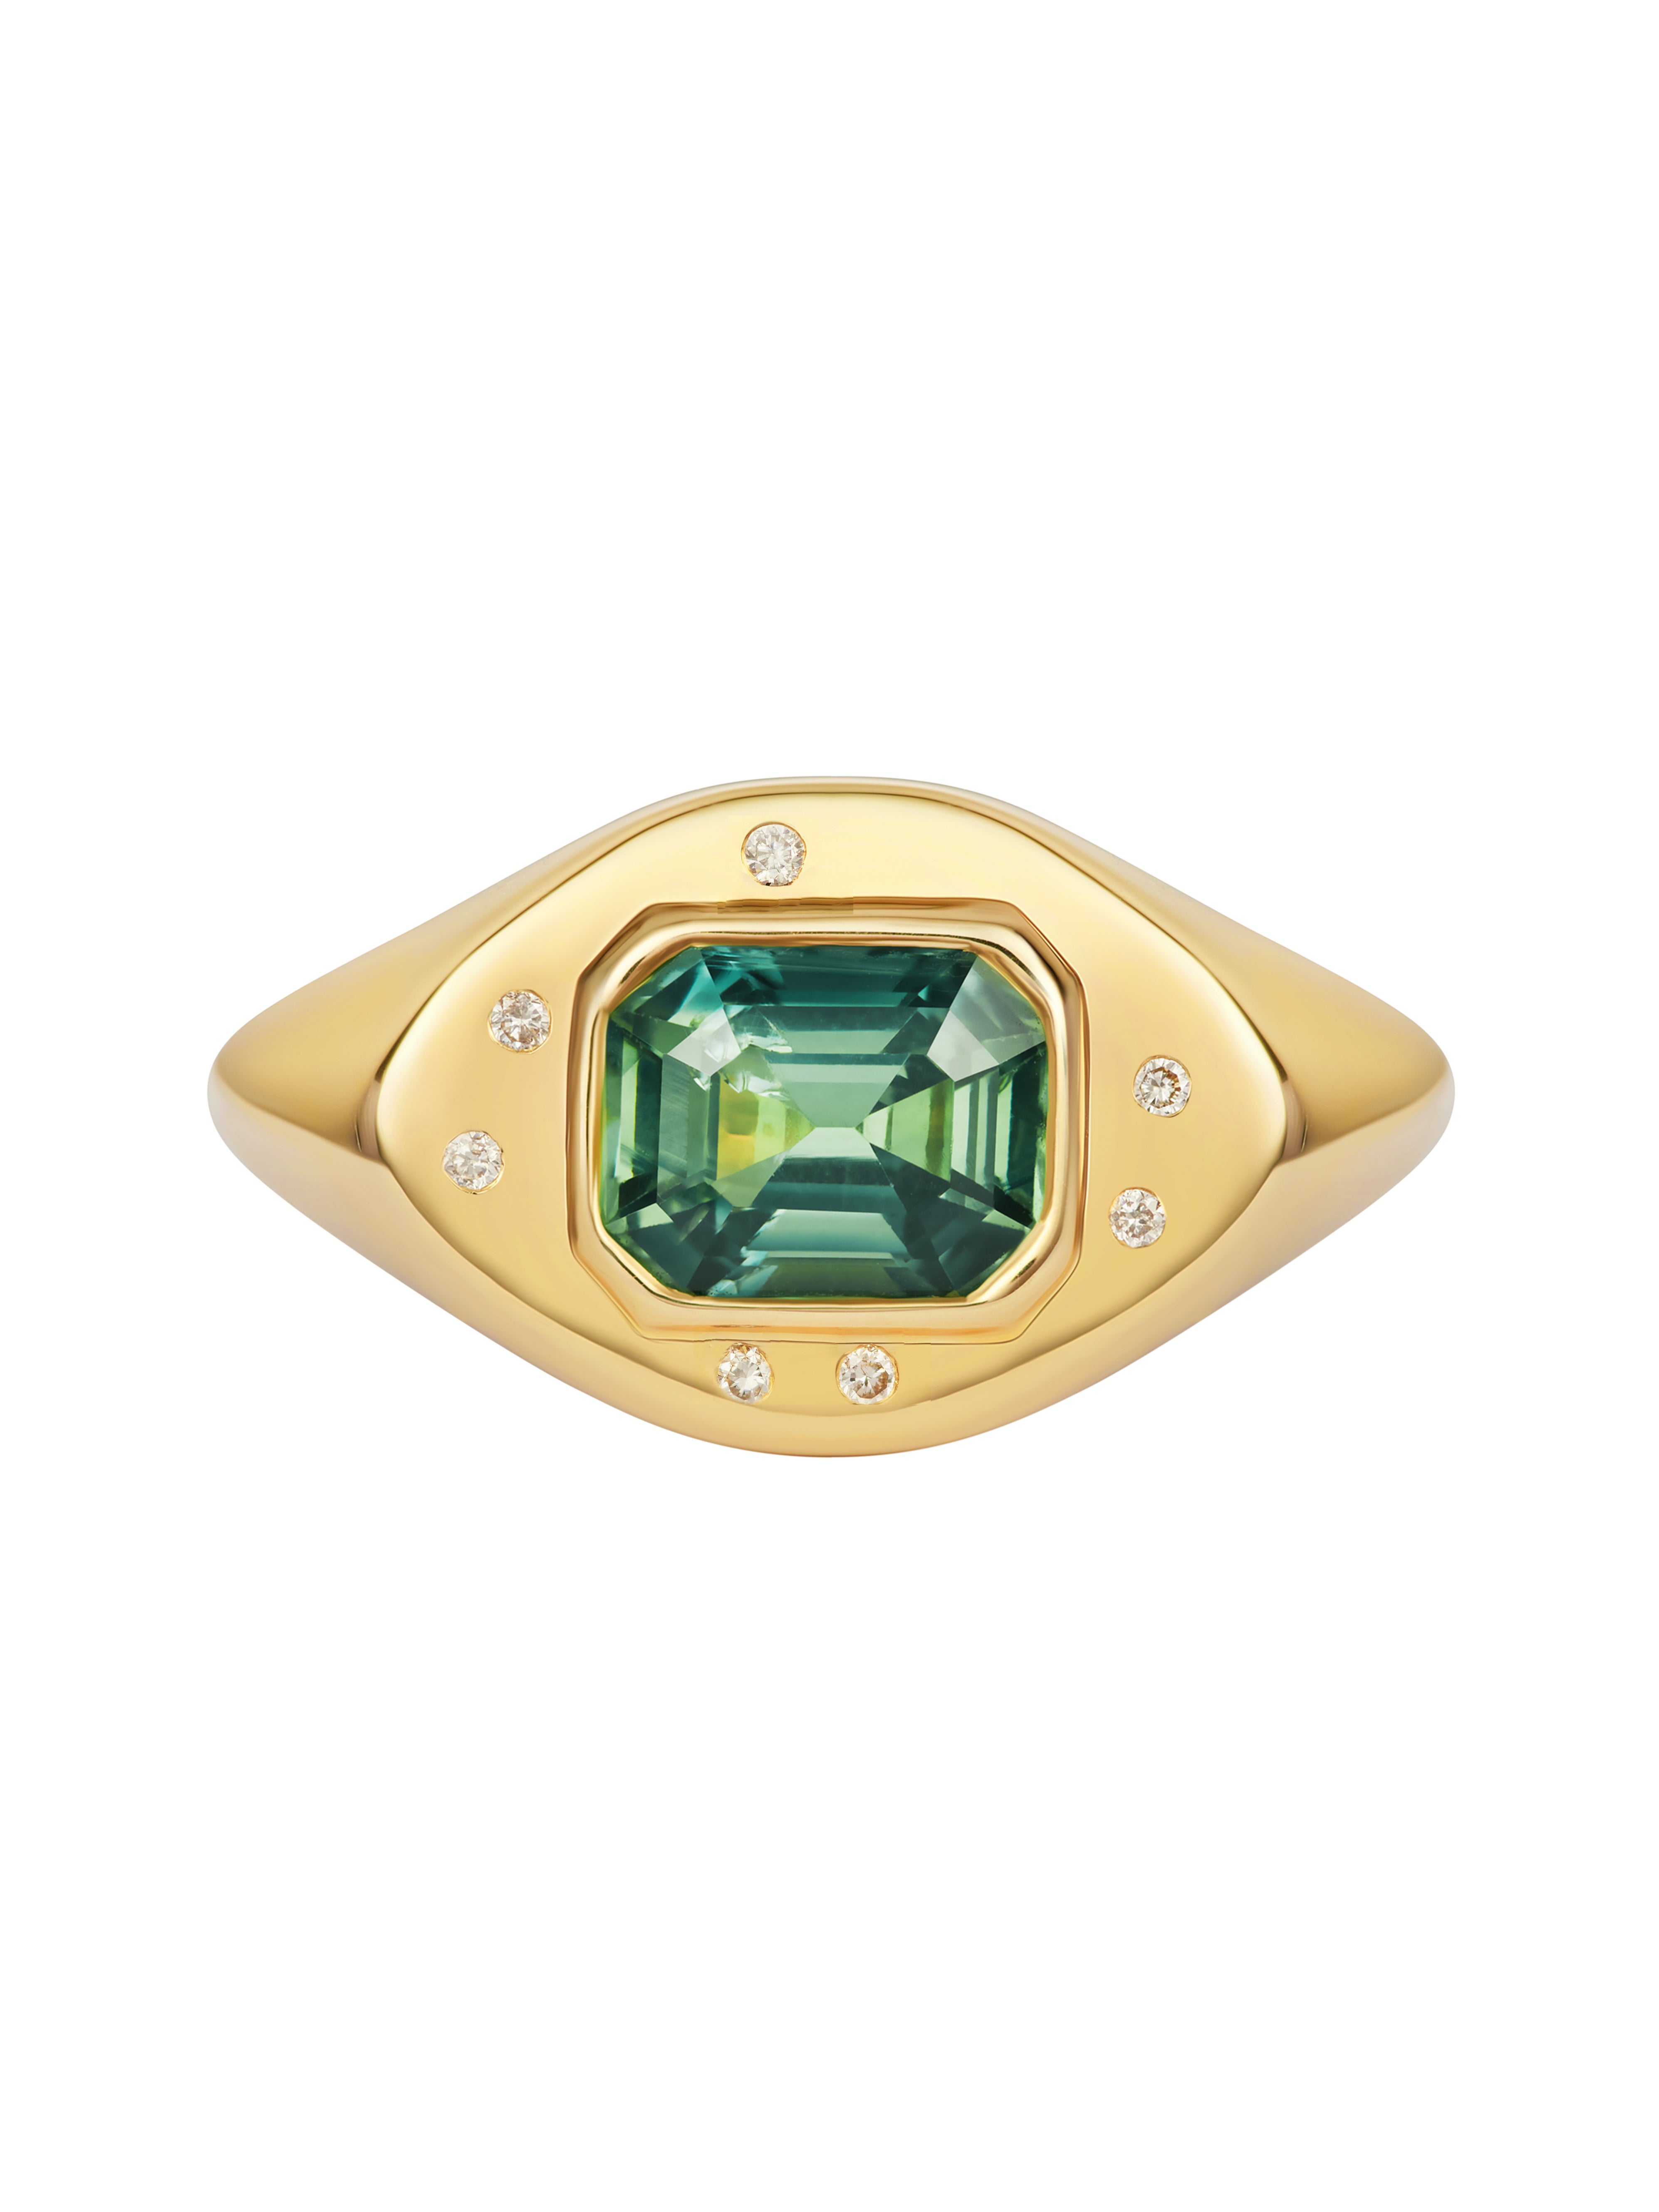 Green Sapphire Signet Ring